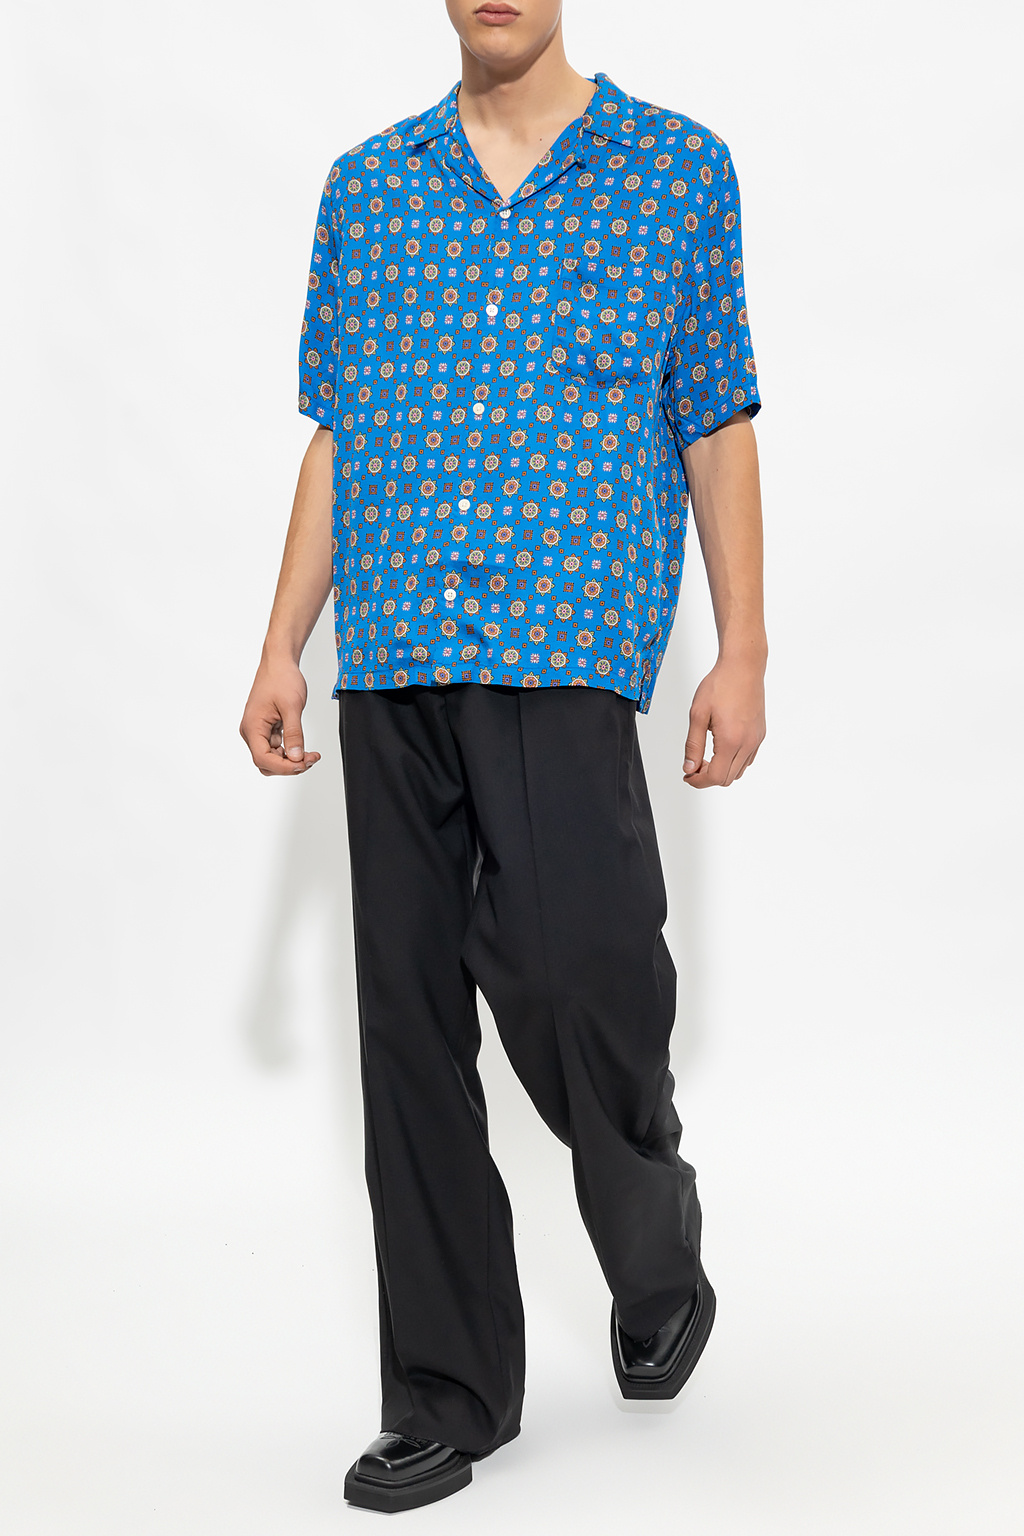 Louis Vuitton Dice Shirt  Mens fashion, Shirts, Mens tops